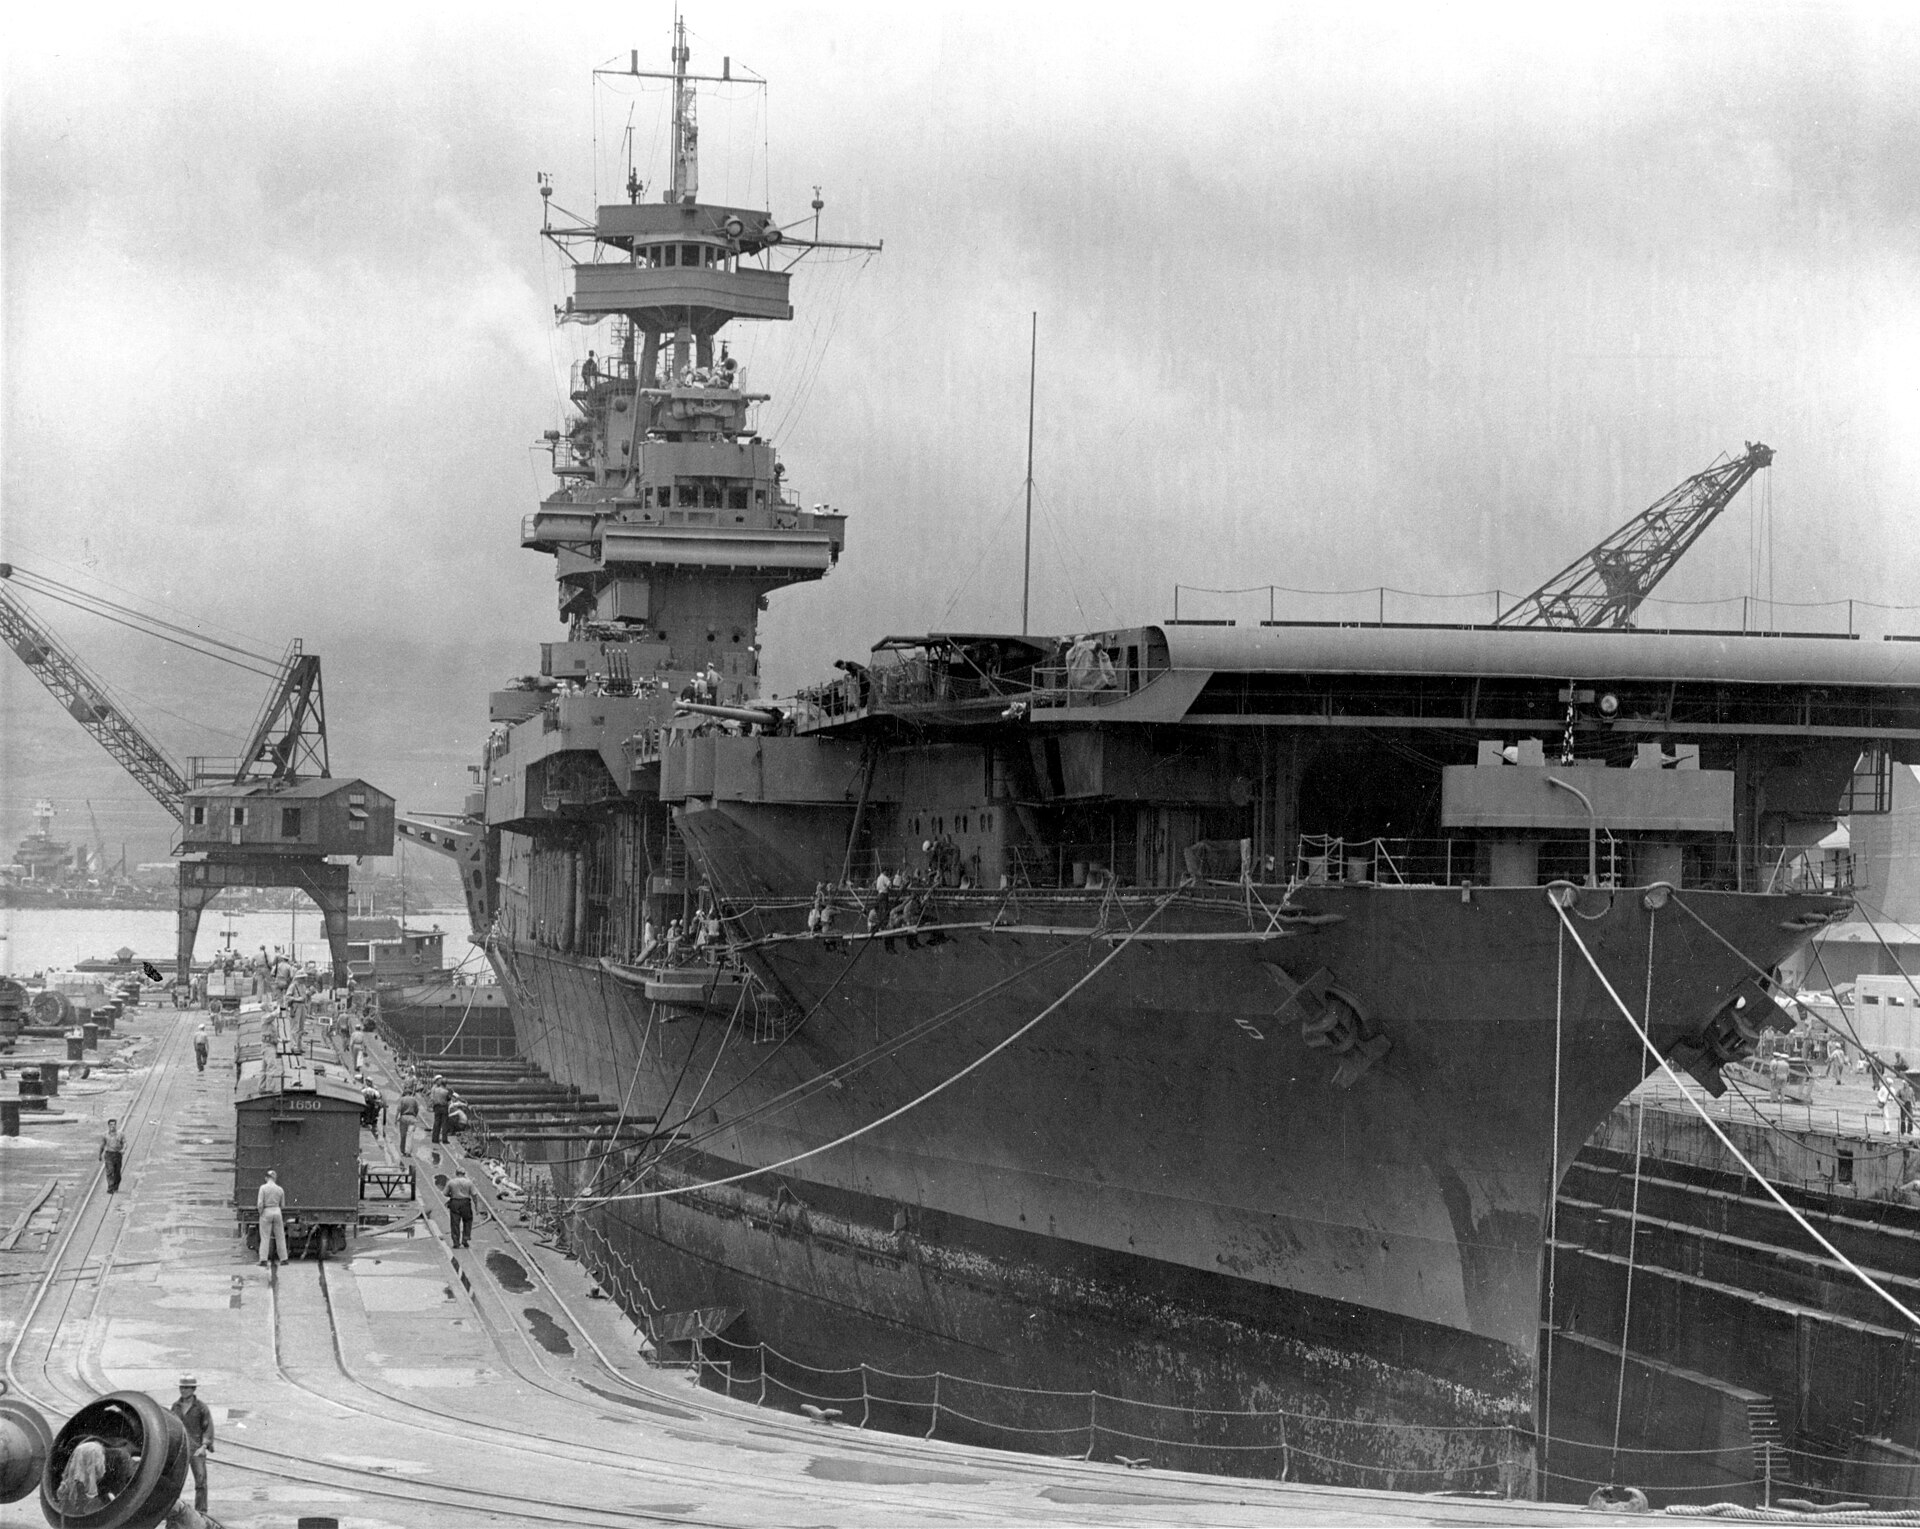 USS_Yorktown_(CV-5)_in_a_dry_dock_at_the_Pearl_Harbor_Naval_Shipyard,_